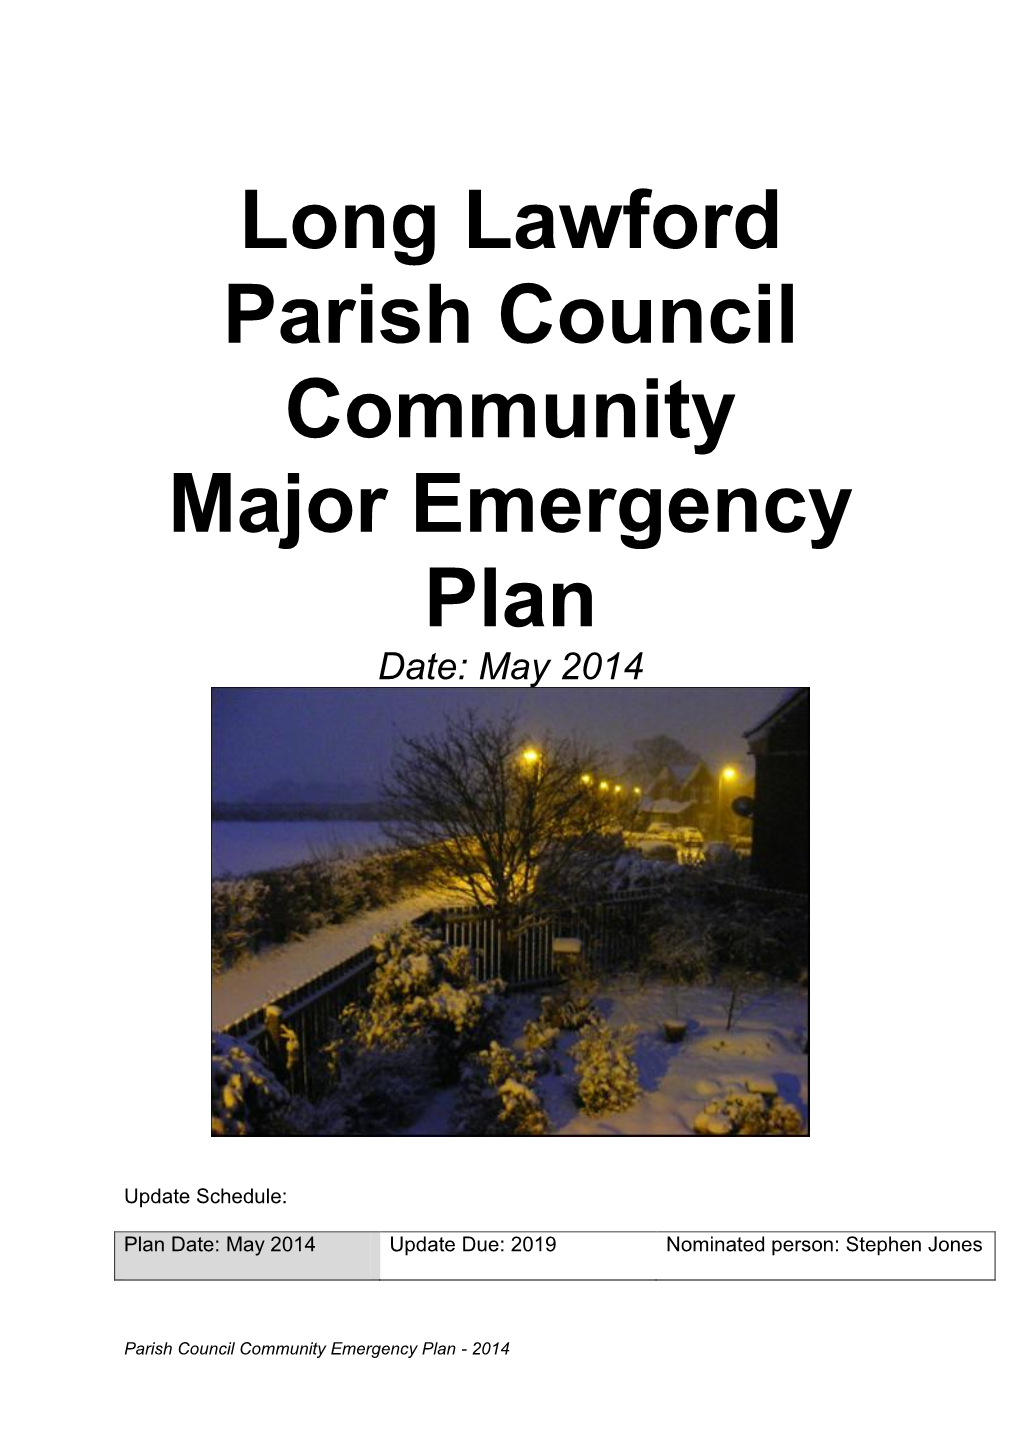 Long Lawford Parish Council Community Major Emergency Plan Date: May 2014